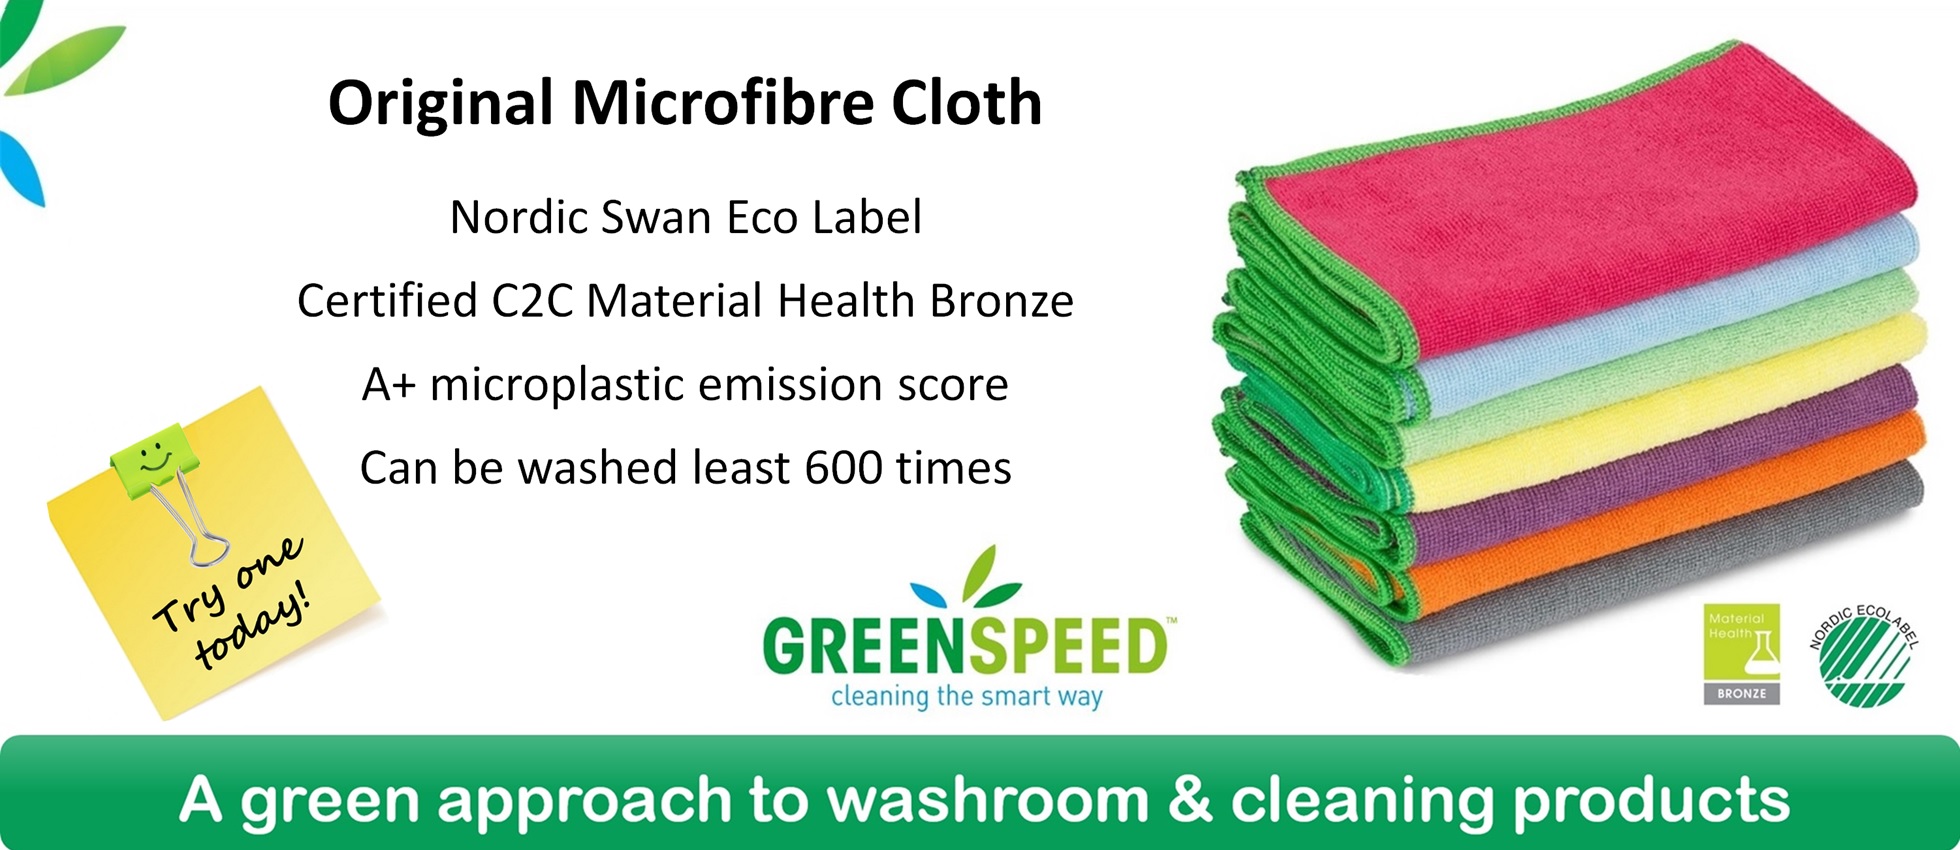 Greenspeed Original Microfibre Cloths